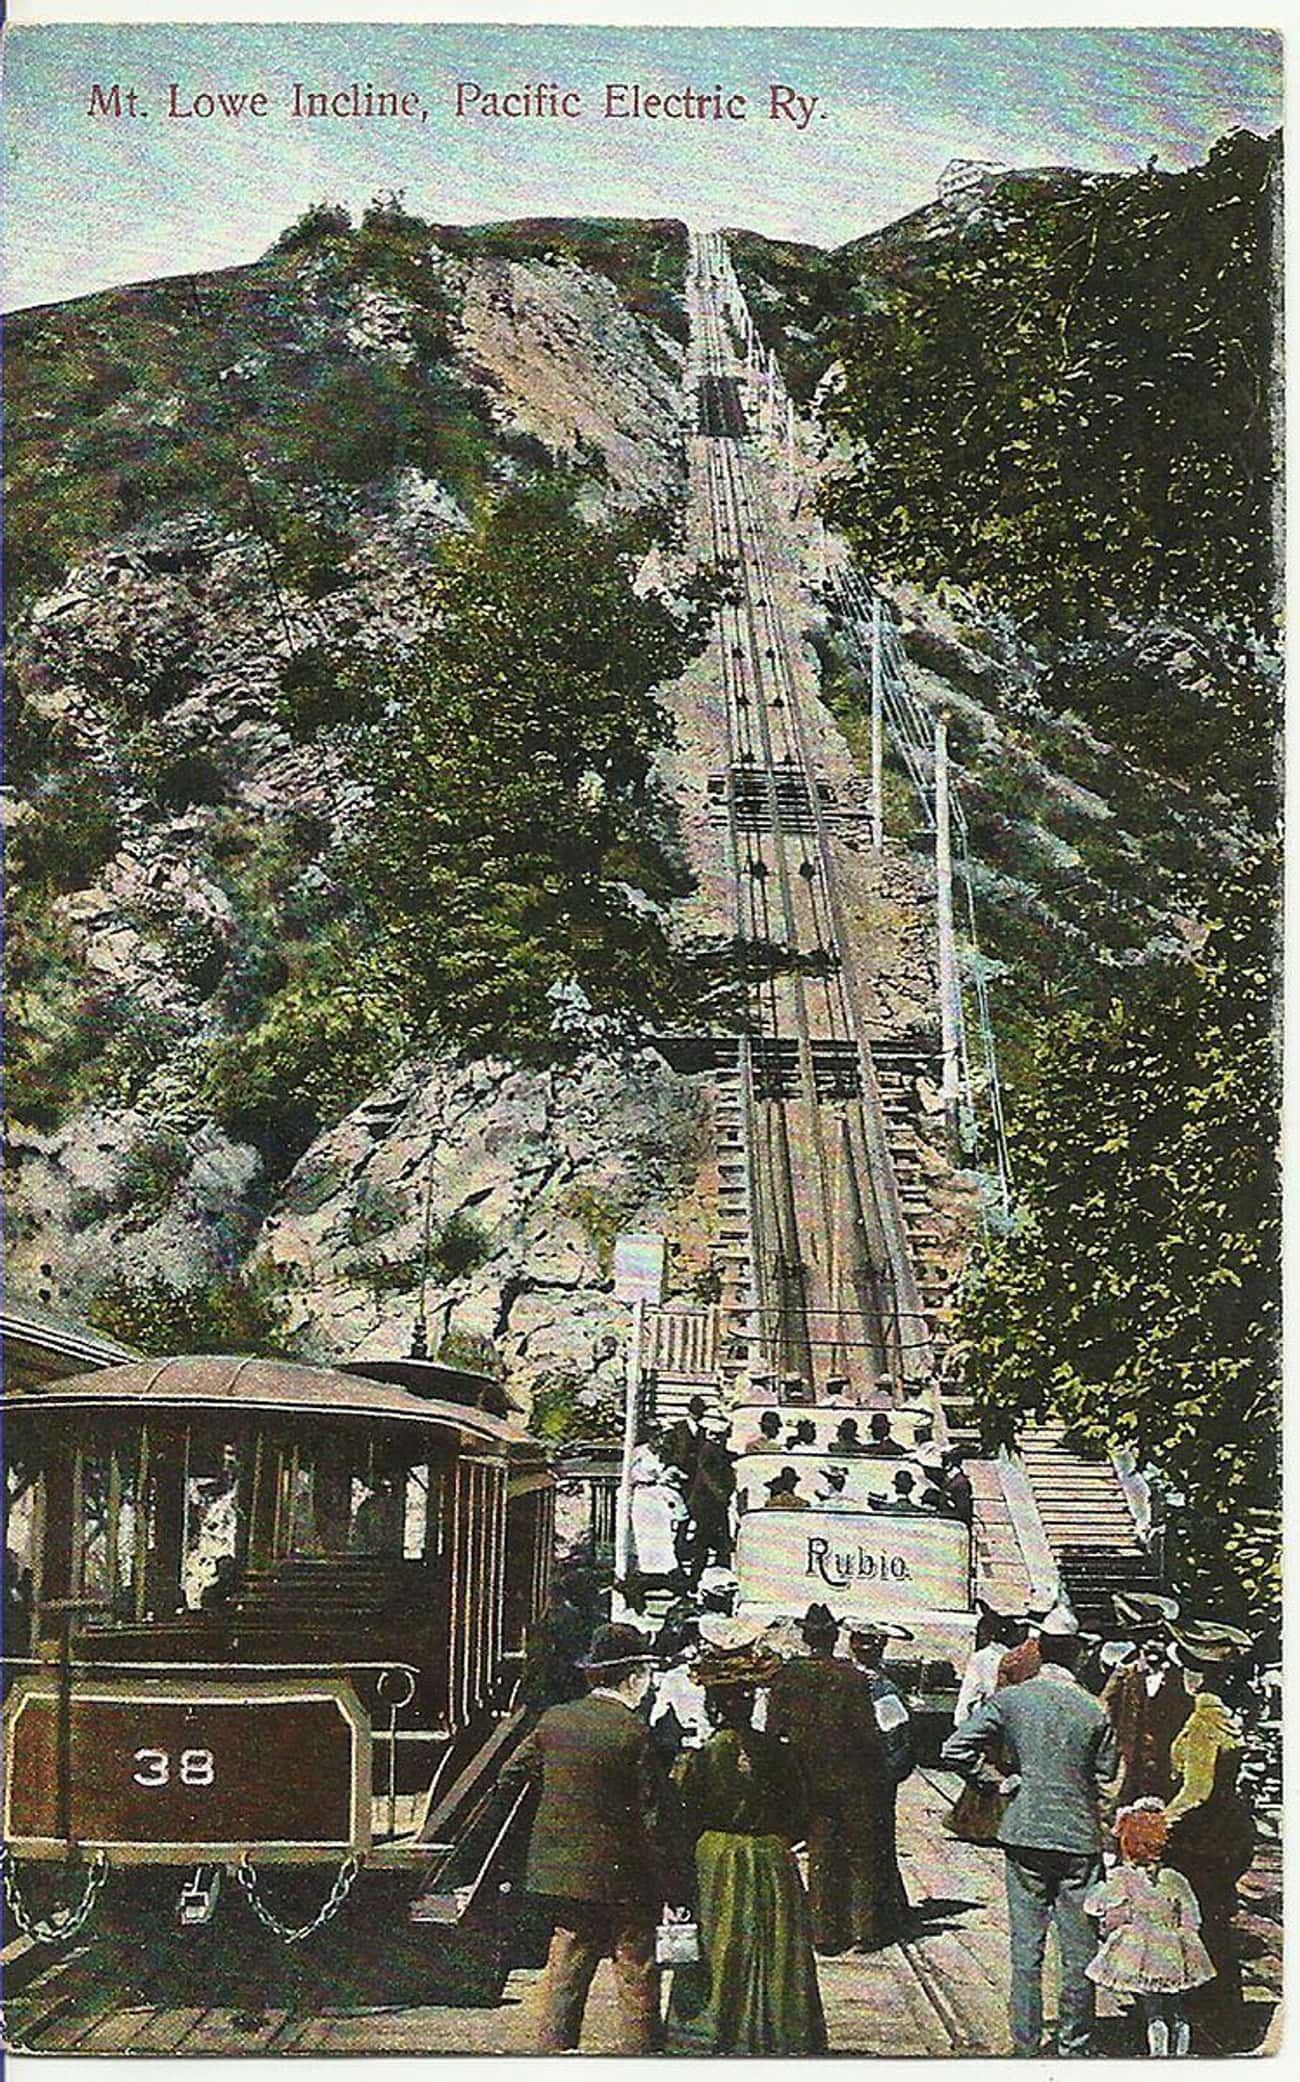 Mt. Lowe Railway